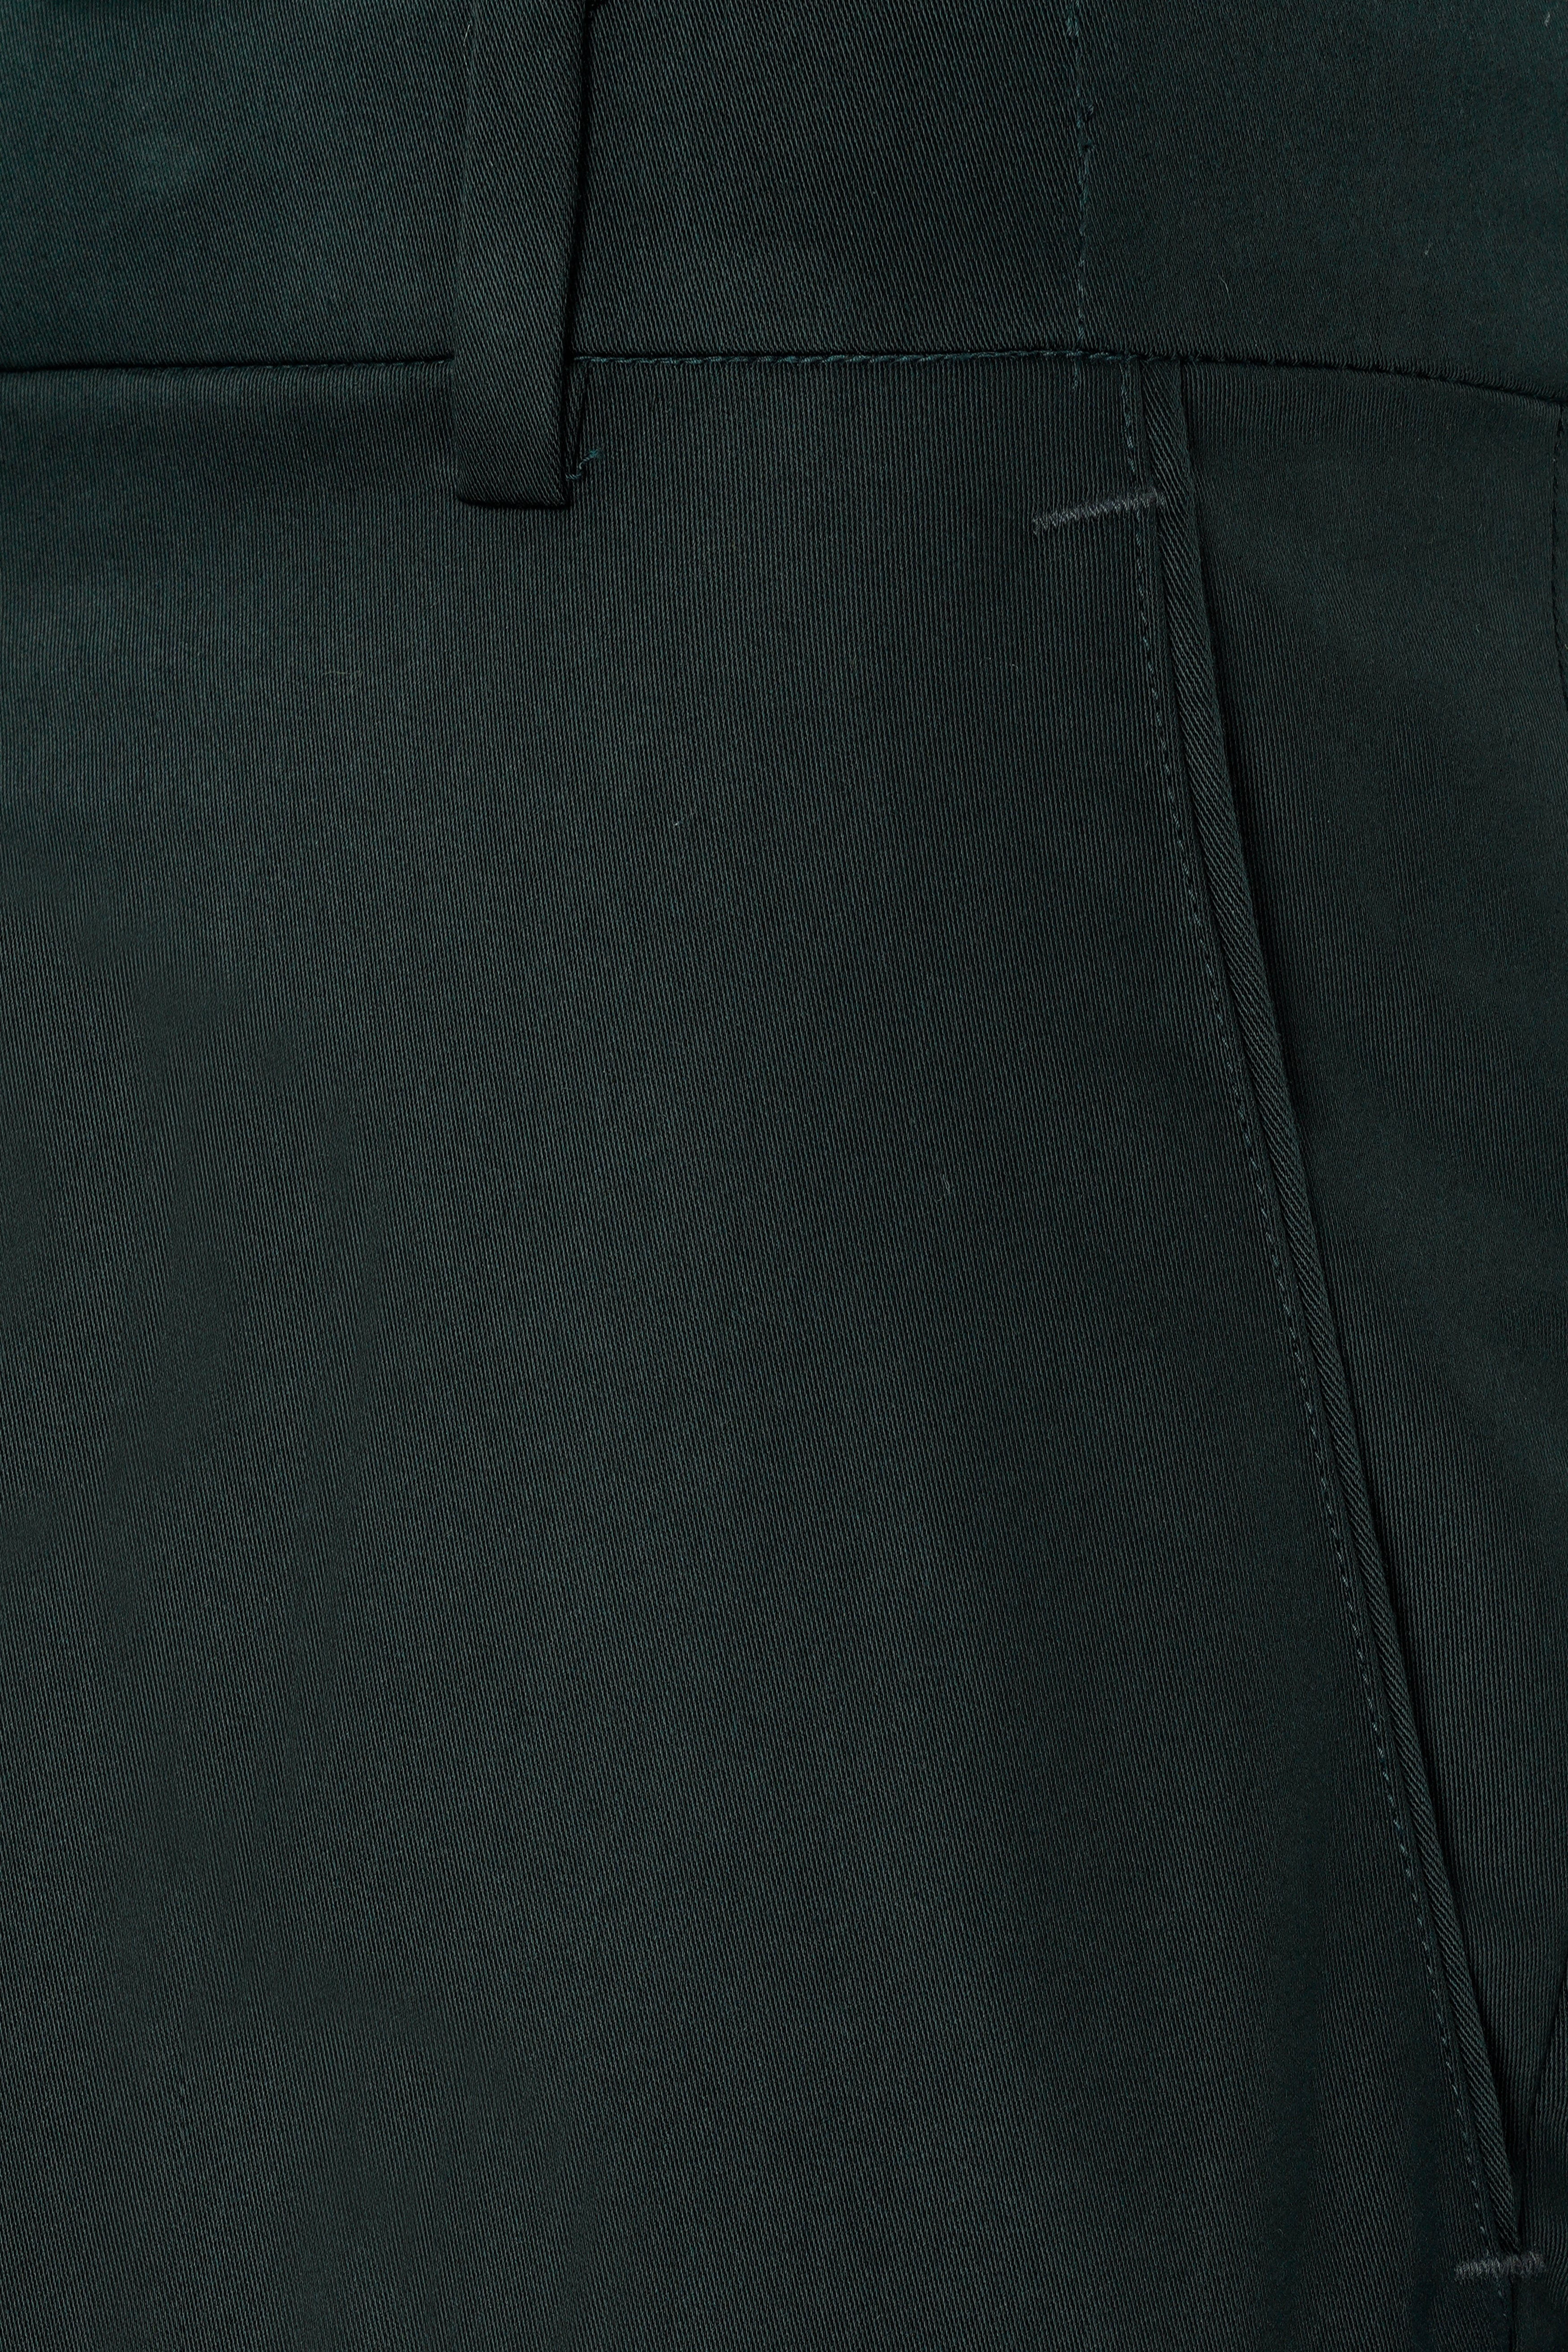 Dark Slate Green with Horizontal Stitched Wool Rich Bandhgala Designer Suit ST3035-BG-D168-36, ST3035-BG-D168-38, ST3035-BG-D168-40, ST3035-BG-D168-42, ST3035-BG-D168-44, ST3035-BG-D168-46, ST3035-BG-D168-48, ST3035-BG-D168-50, ST3035-BG-D168-52, ST3035-BG-D168-54, ST3035-BG-D168-56, ST3035-BG-D168-58, ST3035-BG-D168-60